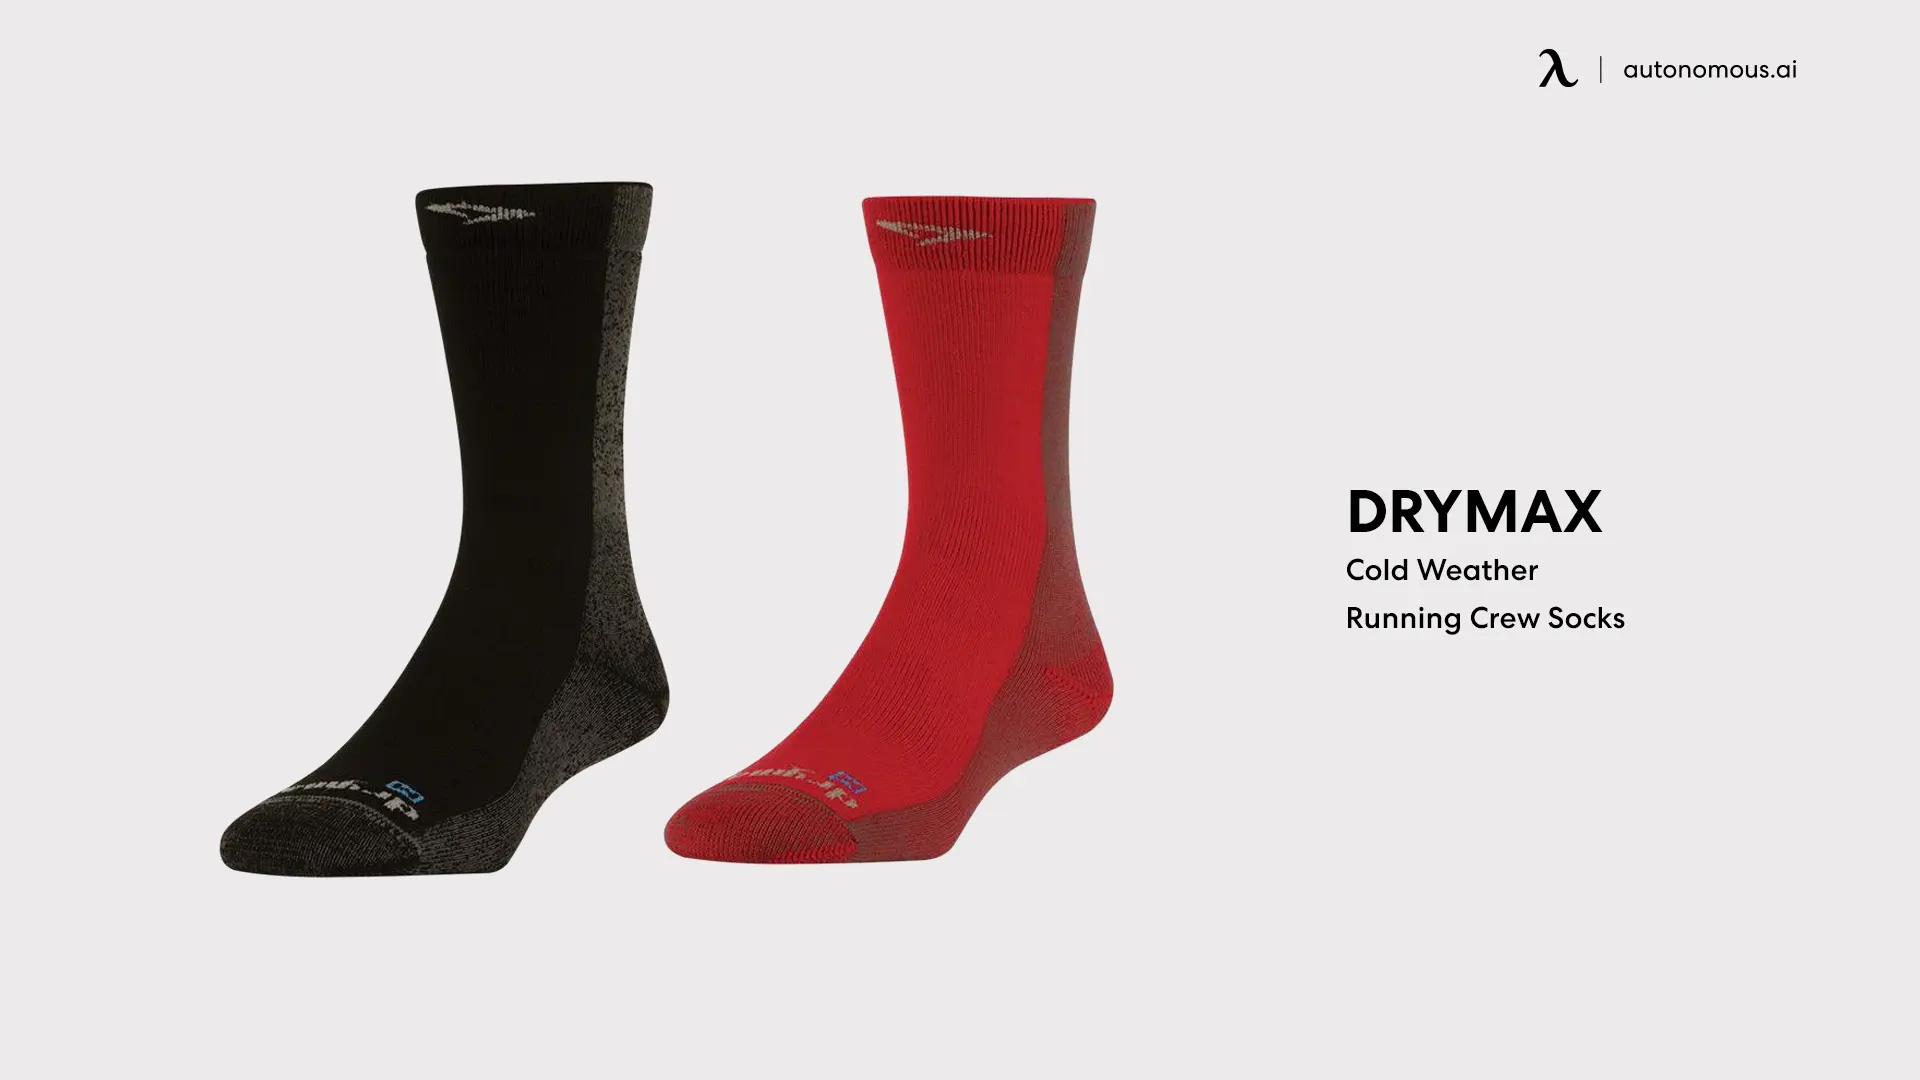 Drymax Cold Weather Running Crew Socks